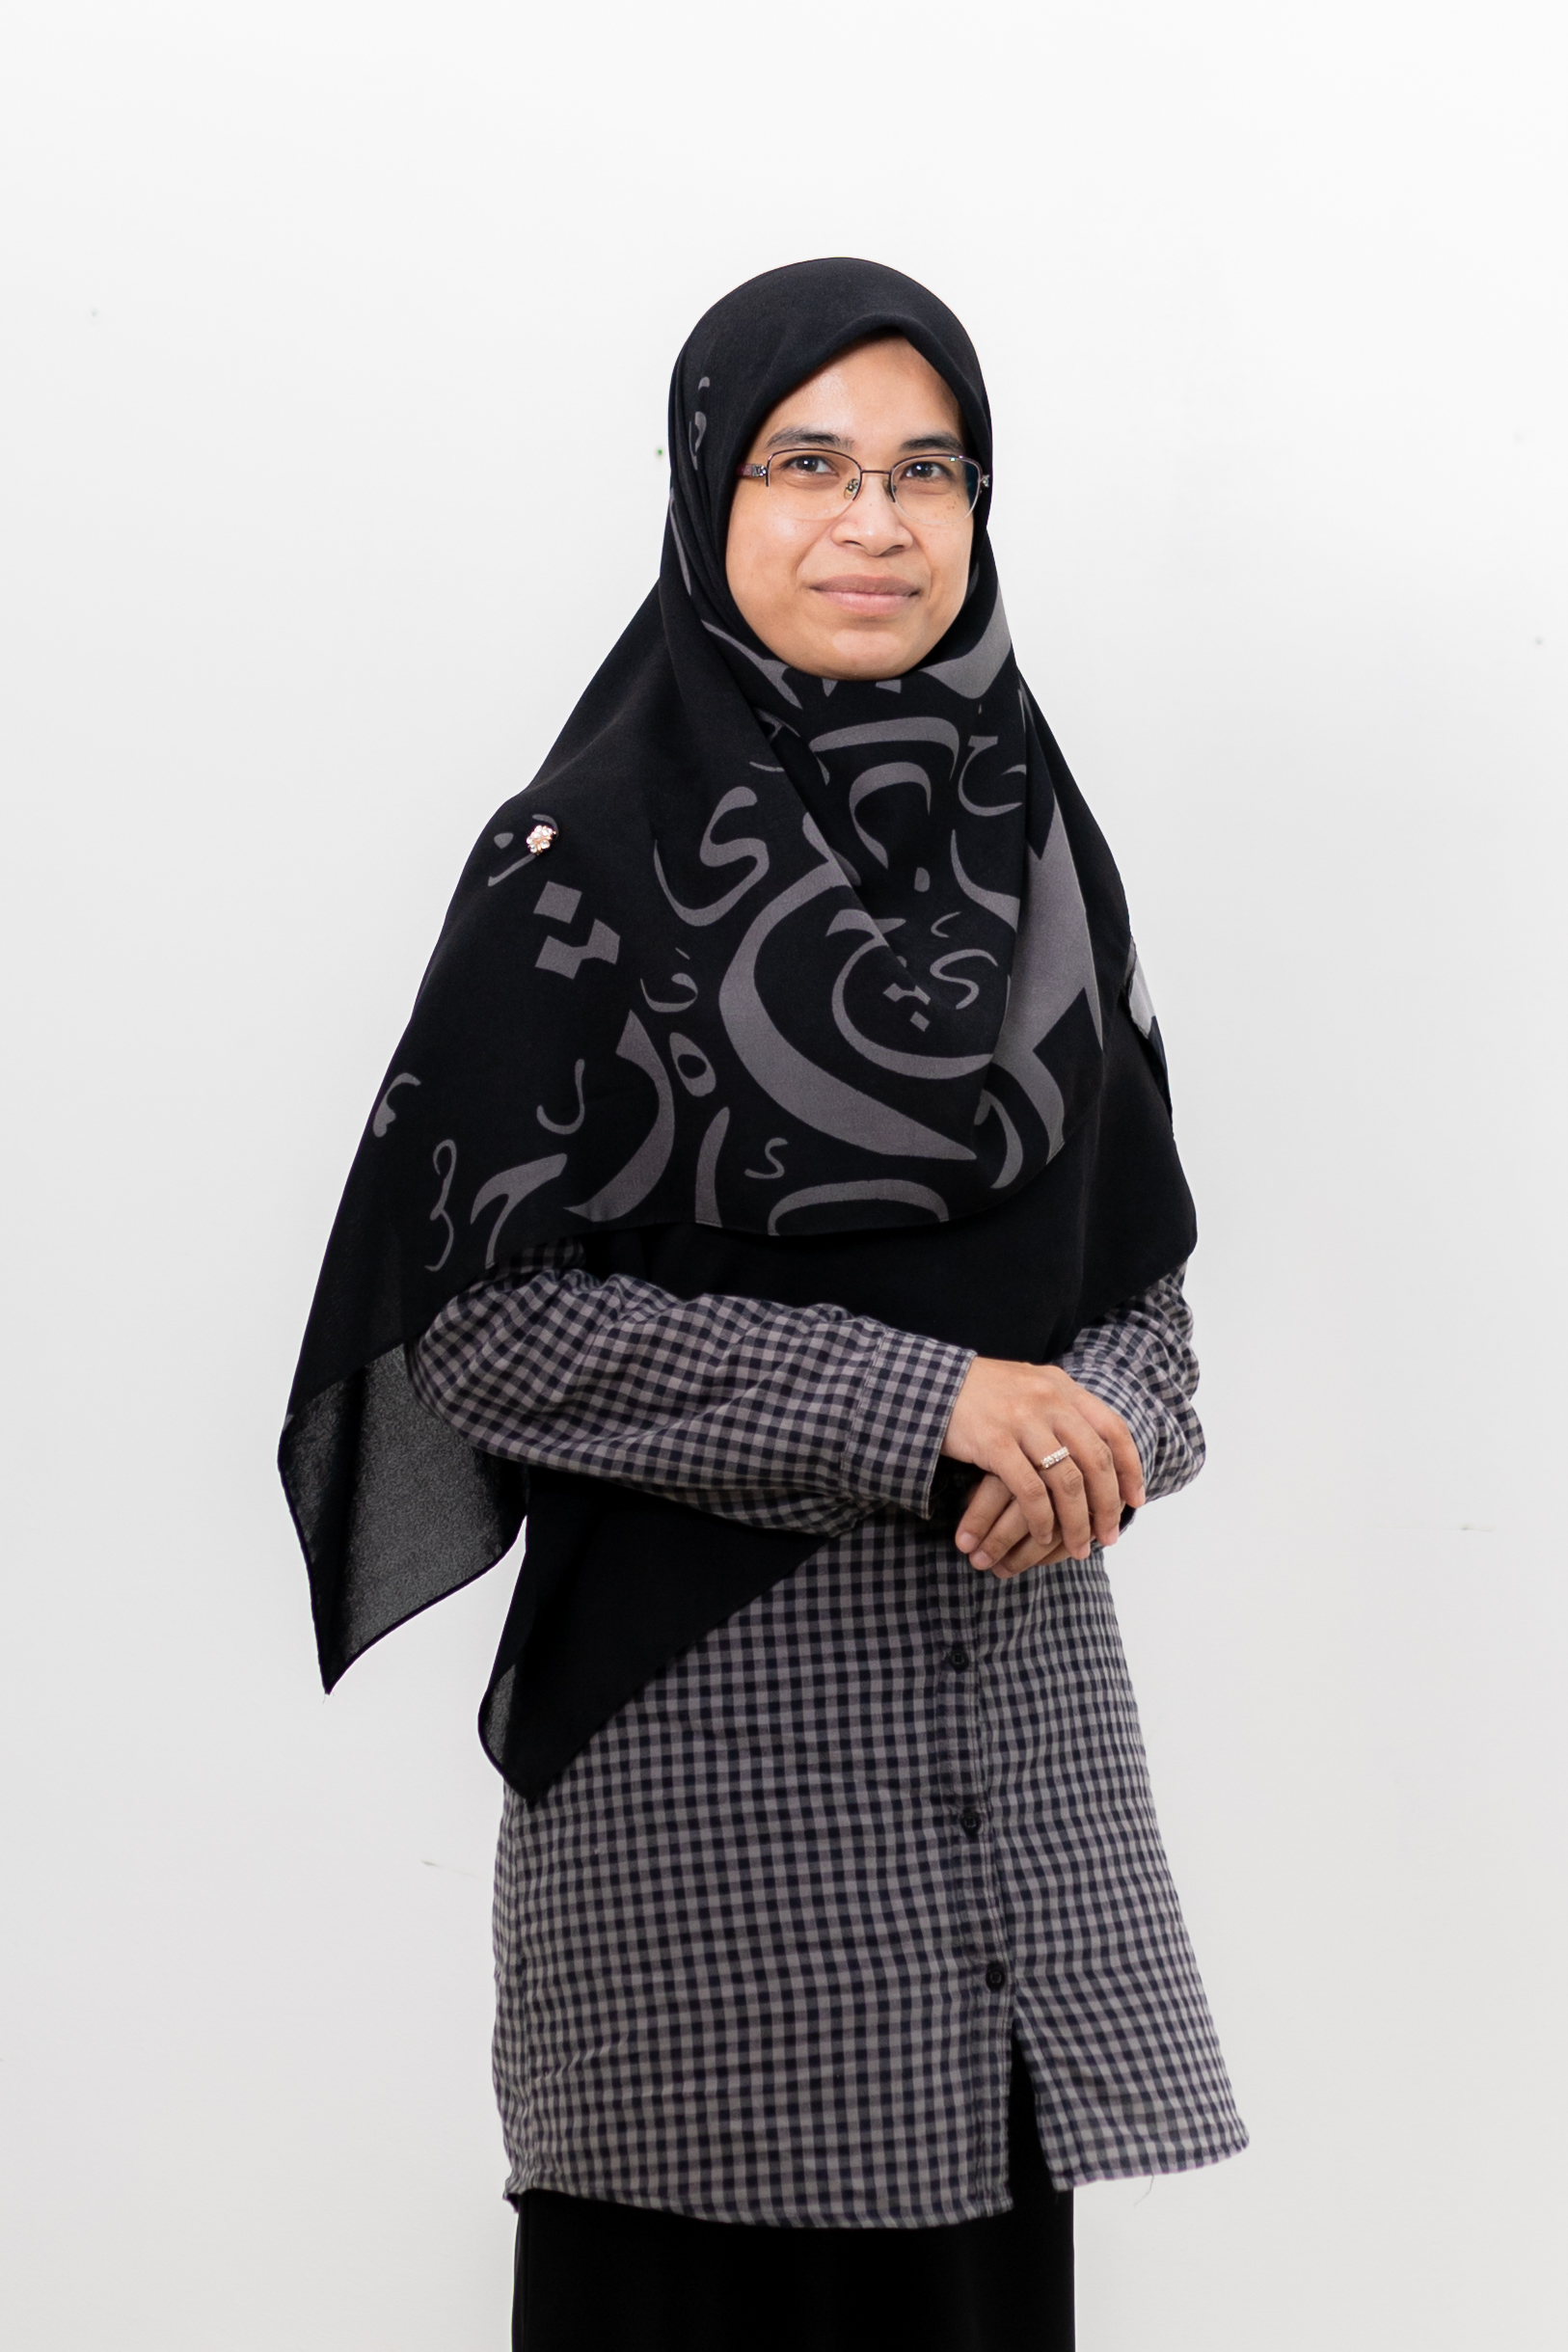 Dr. Fathen Nadia Abd Hadi